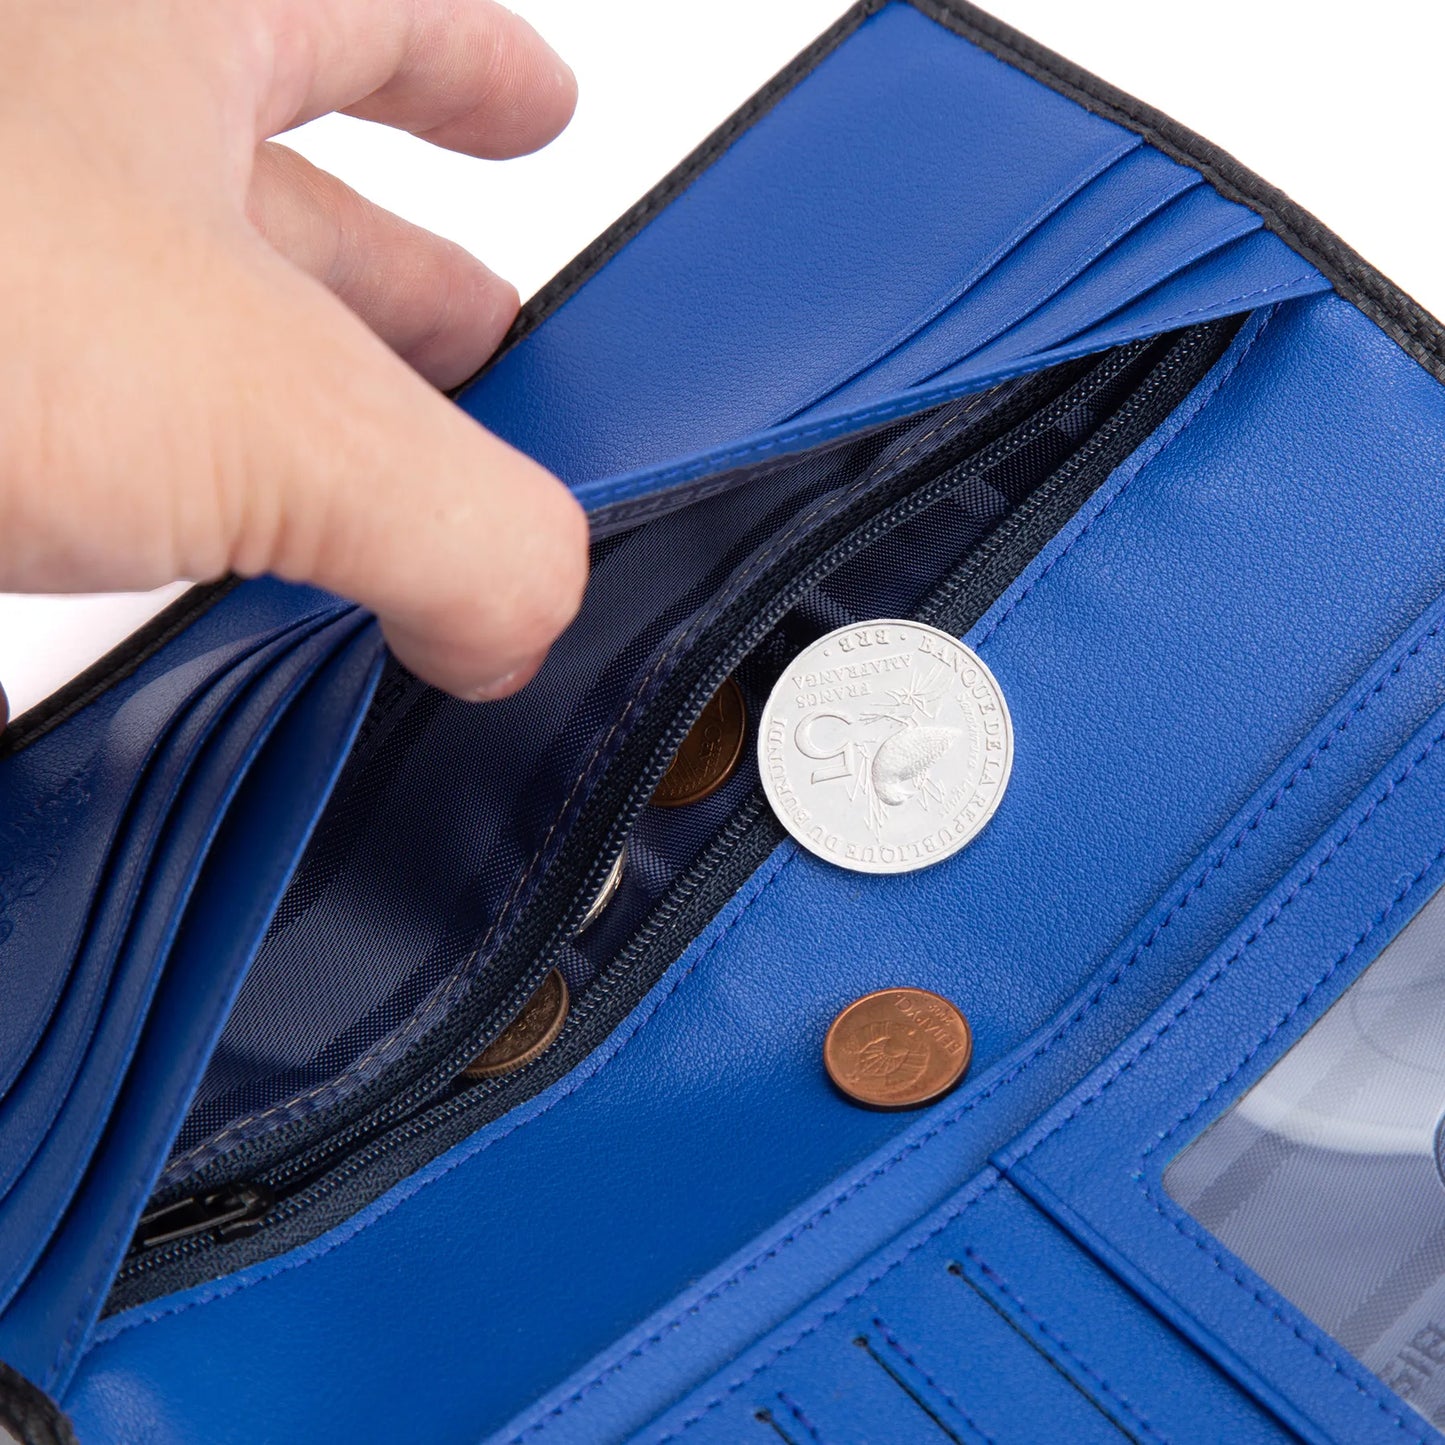 Denim Long Wallet: Carbon Fiber Men's Purse with RFID Blocking, Large Capacity Bill and Card Holder